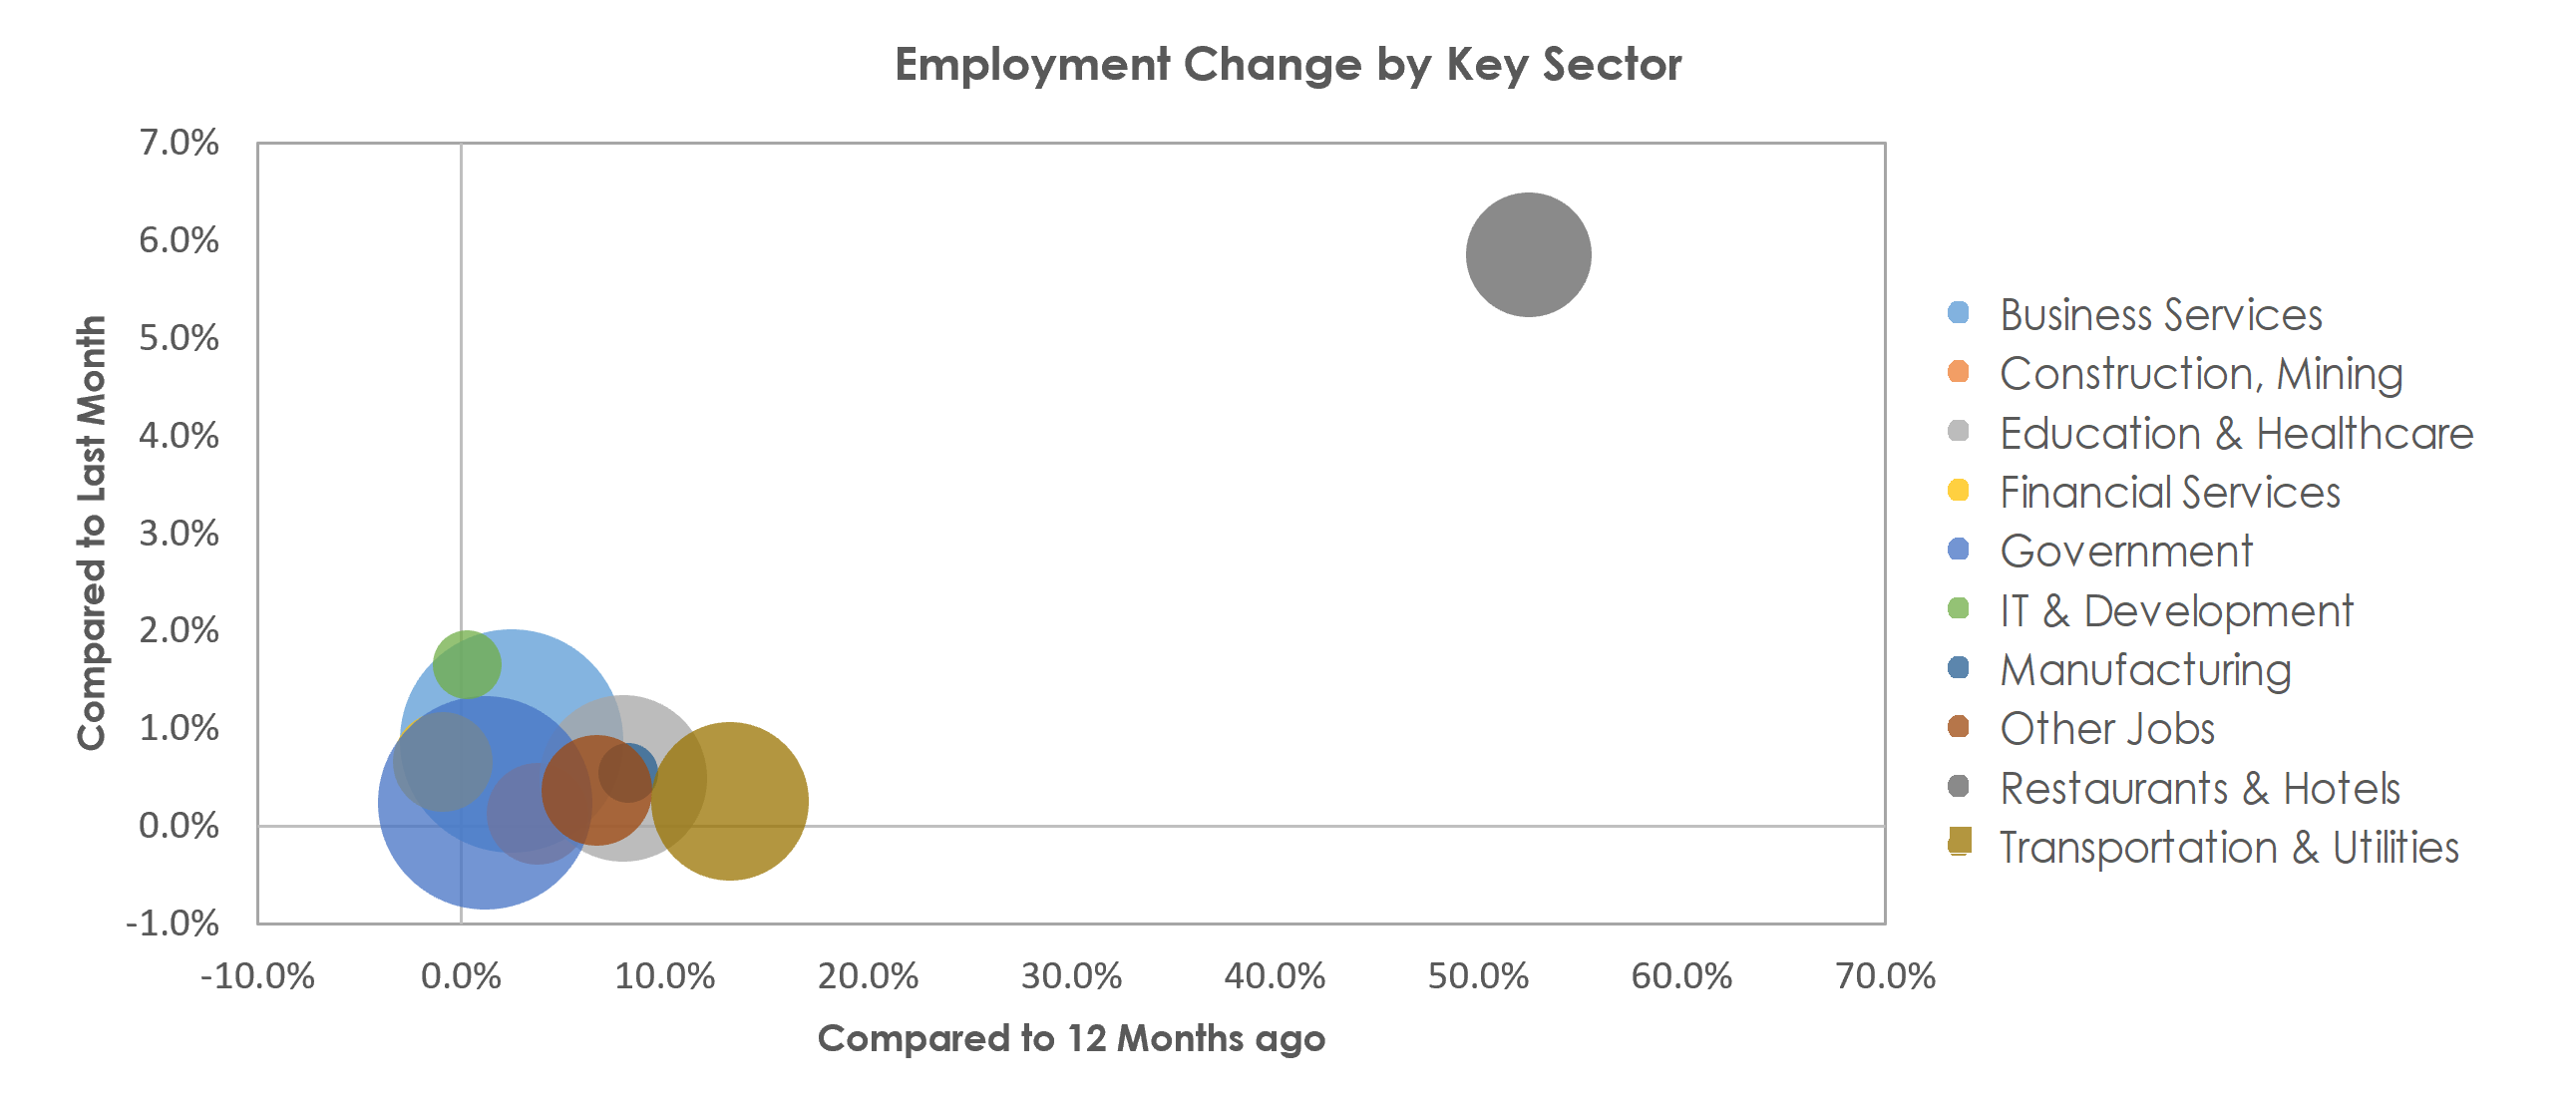 Washington-Arlington-Alexandria, DC-VA-MD-WV Unemployment by Industry April 2021